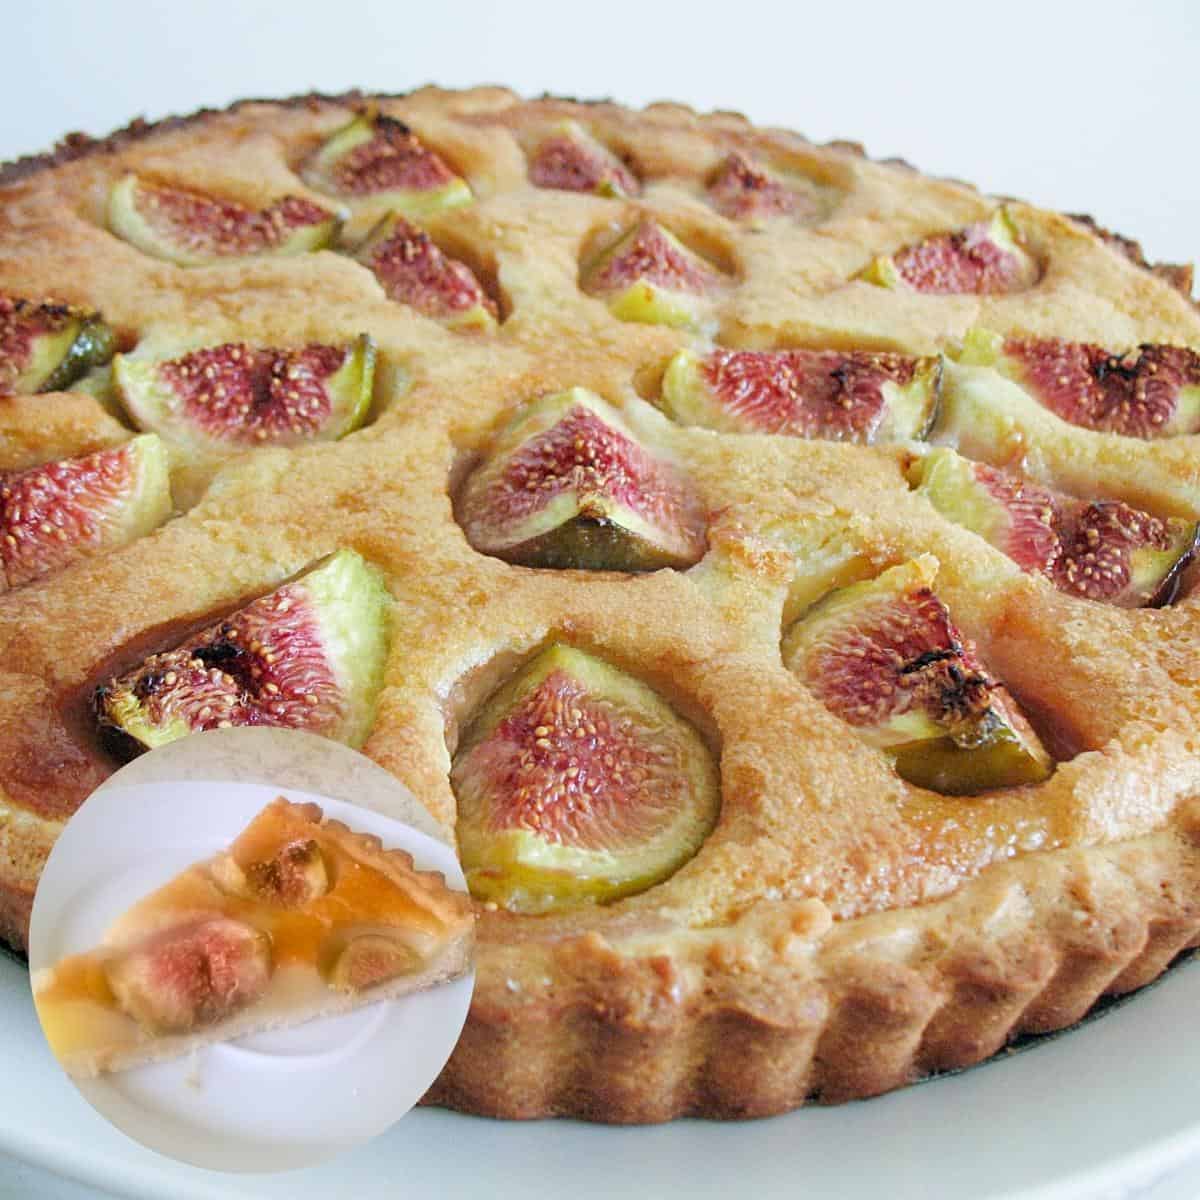 Homemade tart with fresh figs.